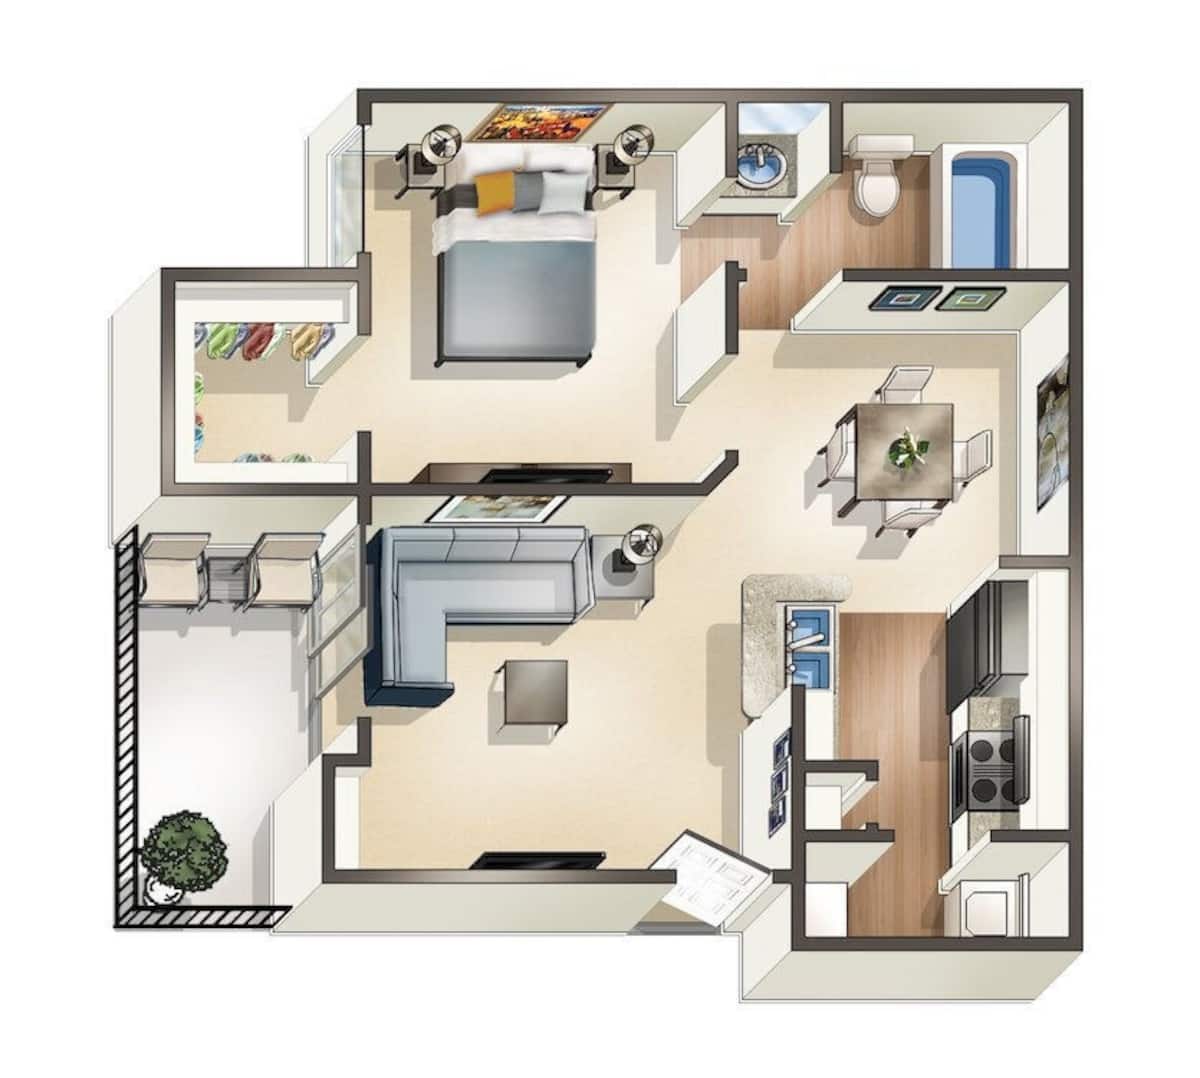 Floorplan diagram for A1BS, showing 1 bedroom